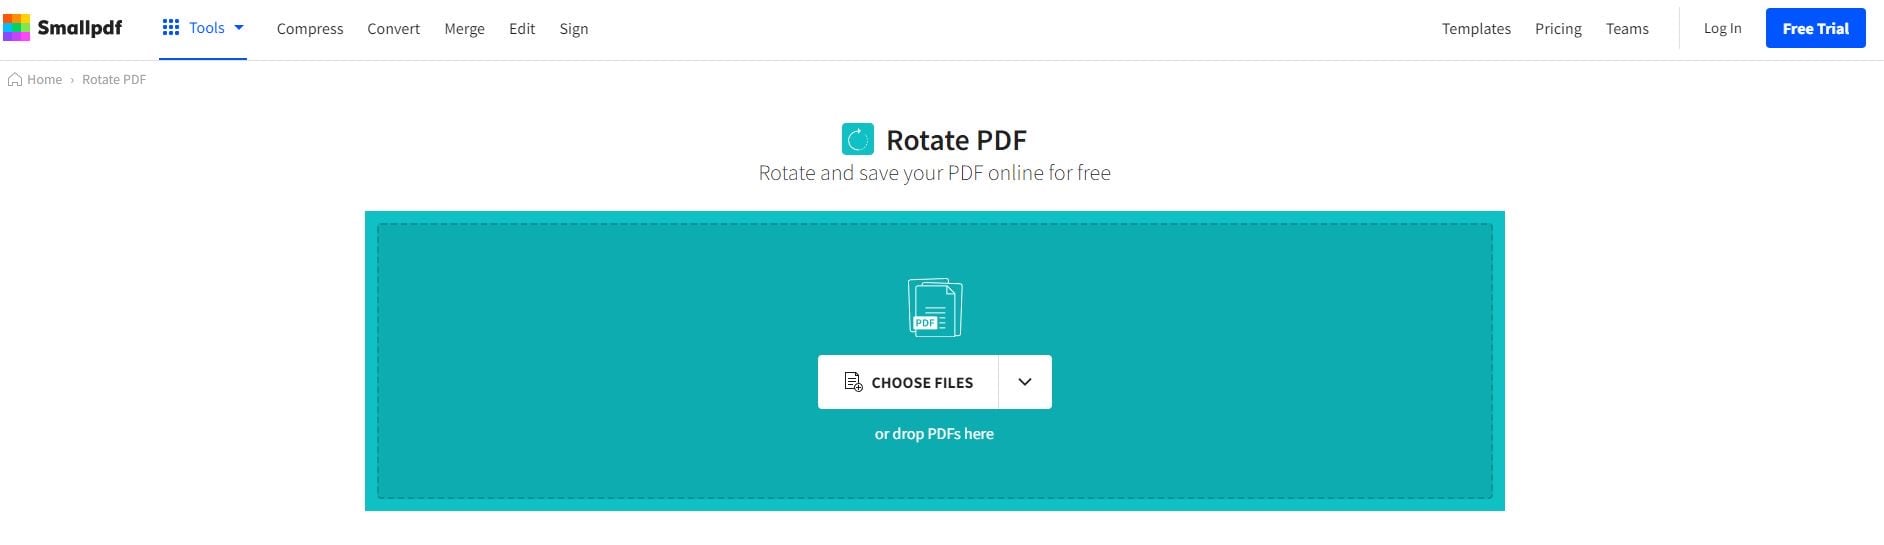 rotate pdf with Smallpdf